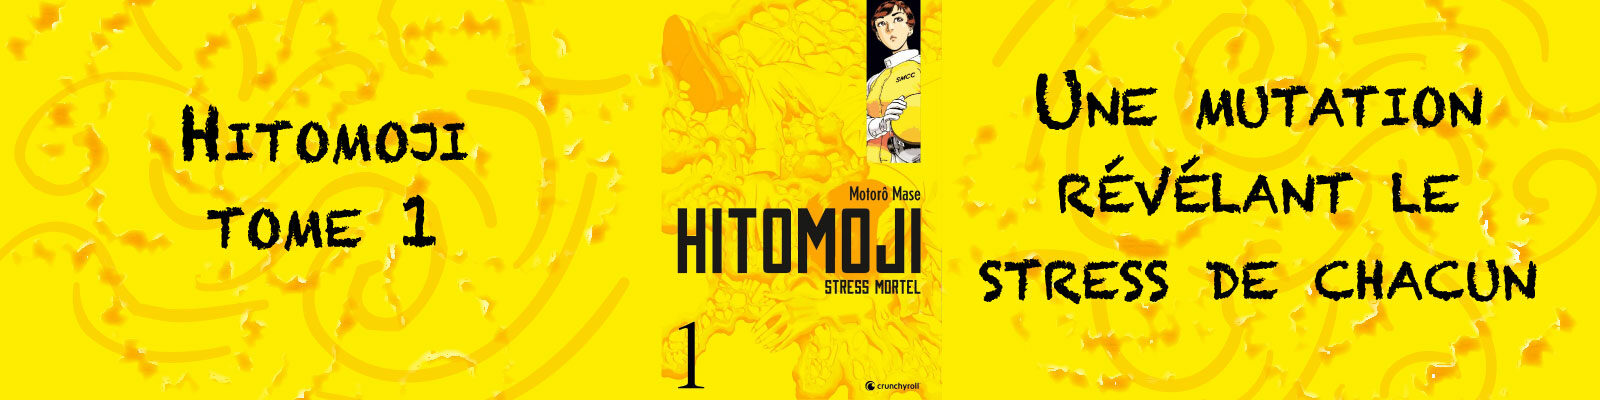 Hitomoji---Stress-Mortel-Vol.1--2